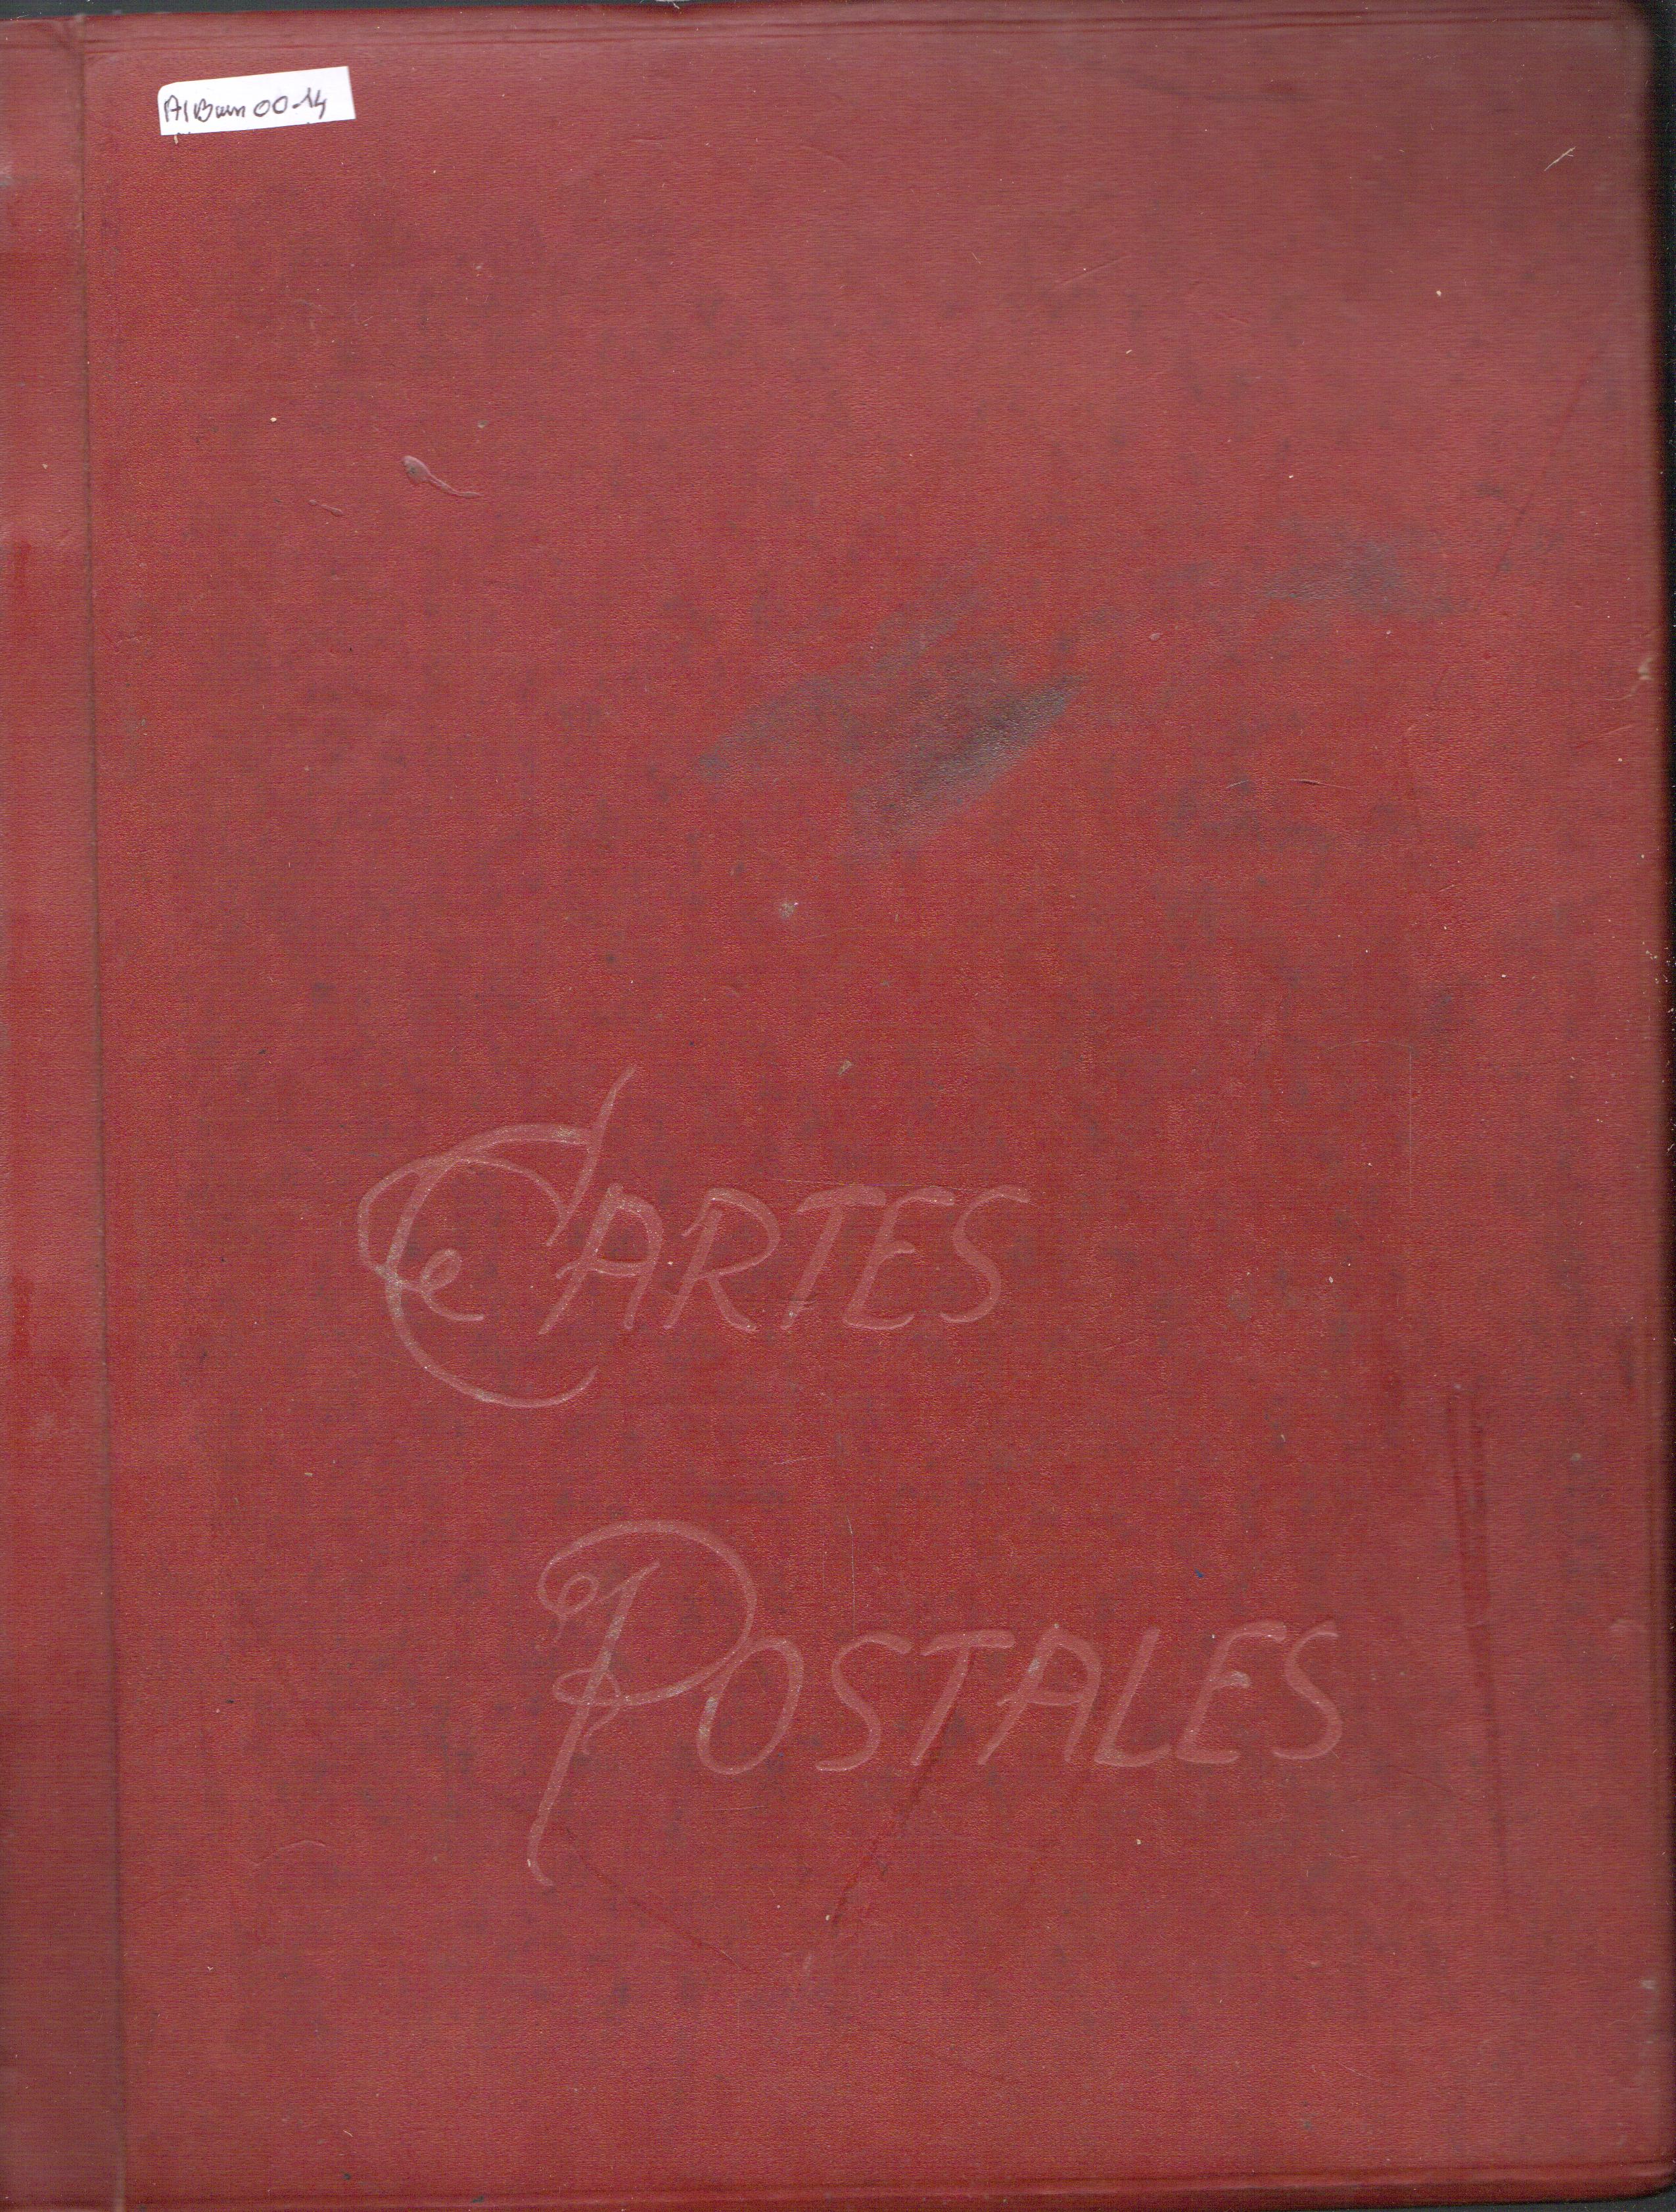 Cartes postales anciennes > CARTES POSTALES > carte postale ancienne > cartes-postales-ancienne.com Cartes postales